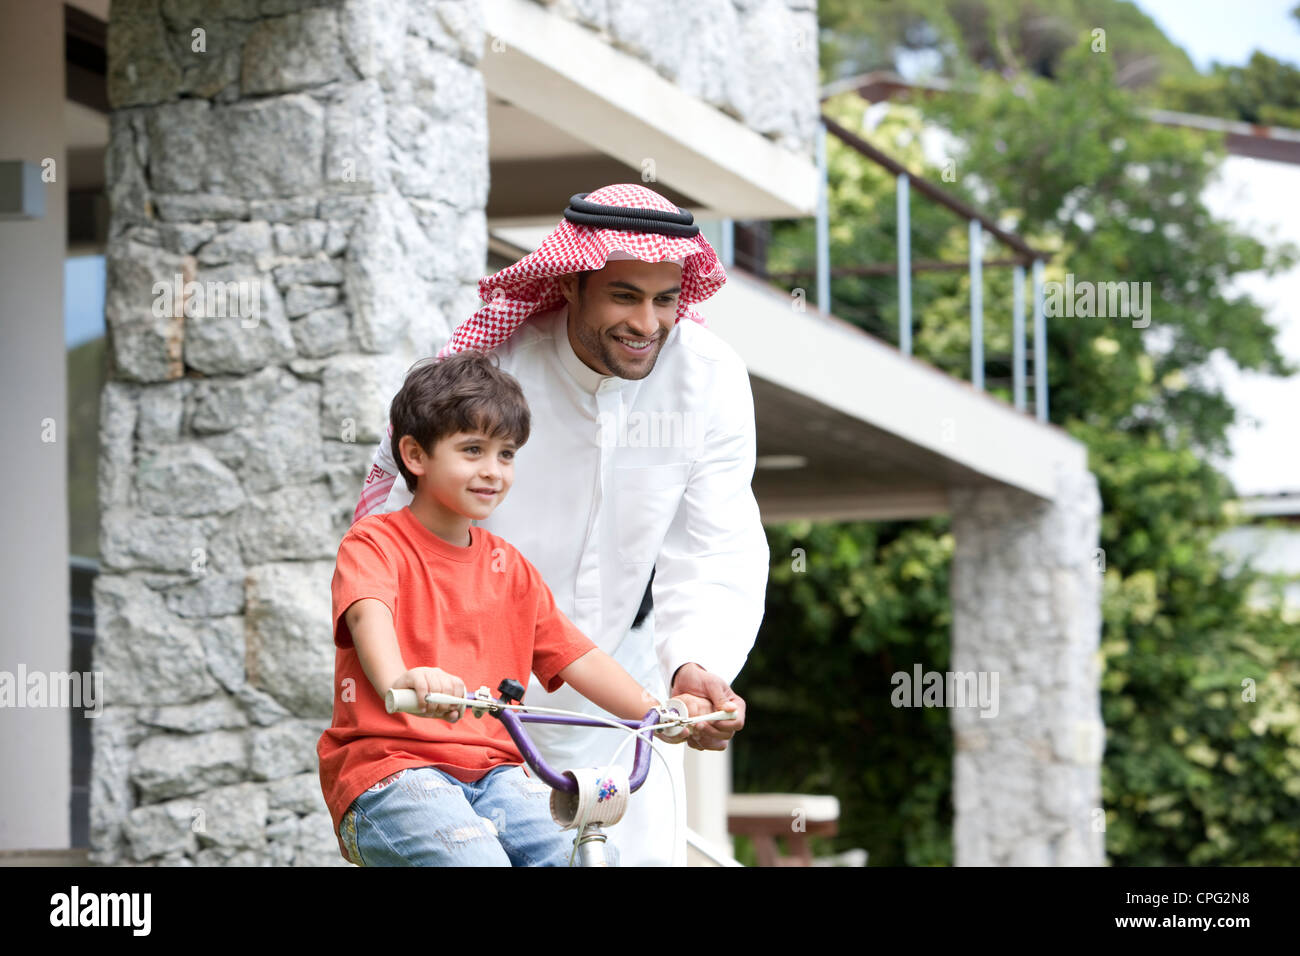 Saudi Family Stockfotos und bilder Kaufen Alamy